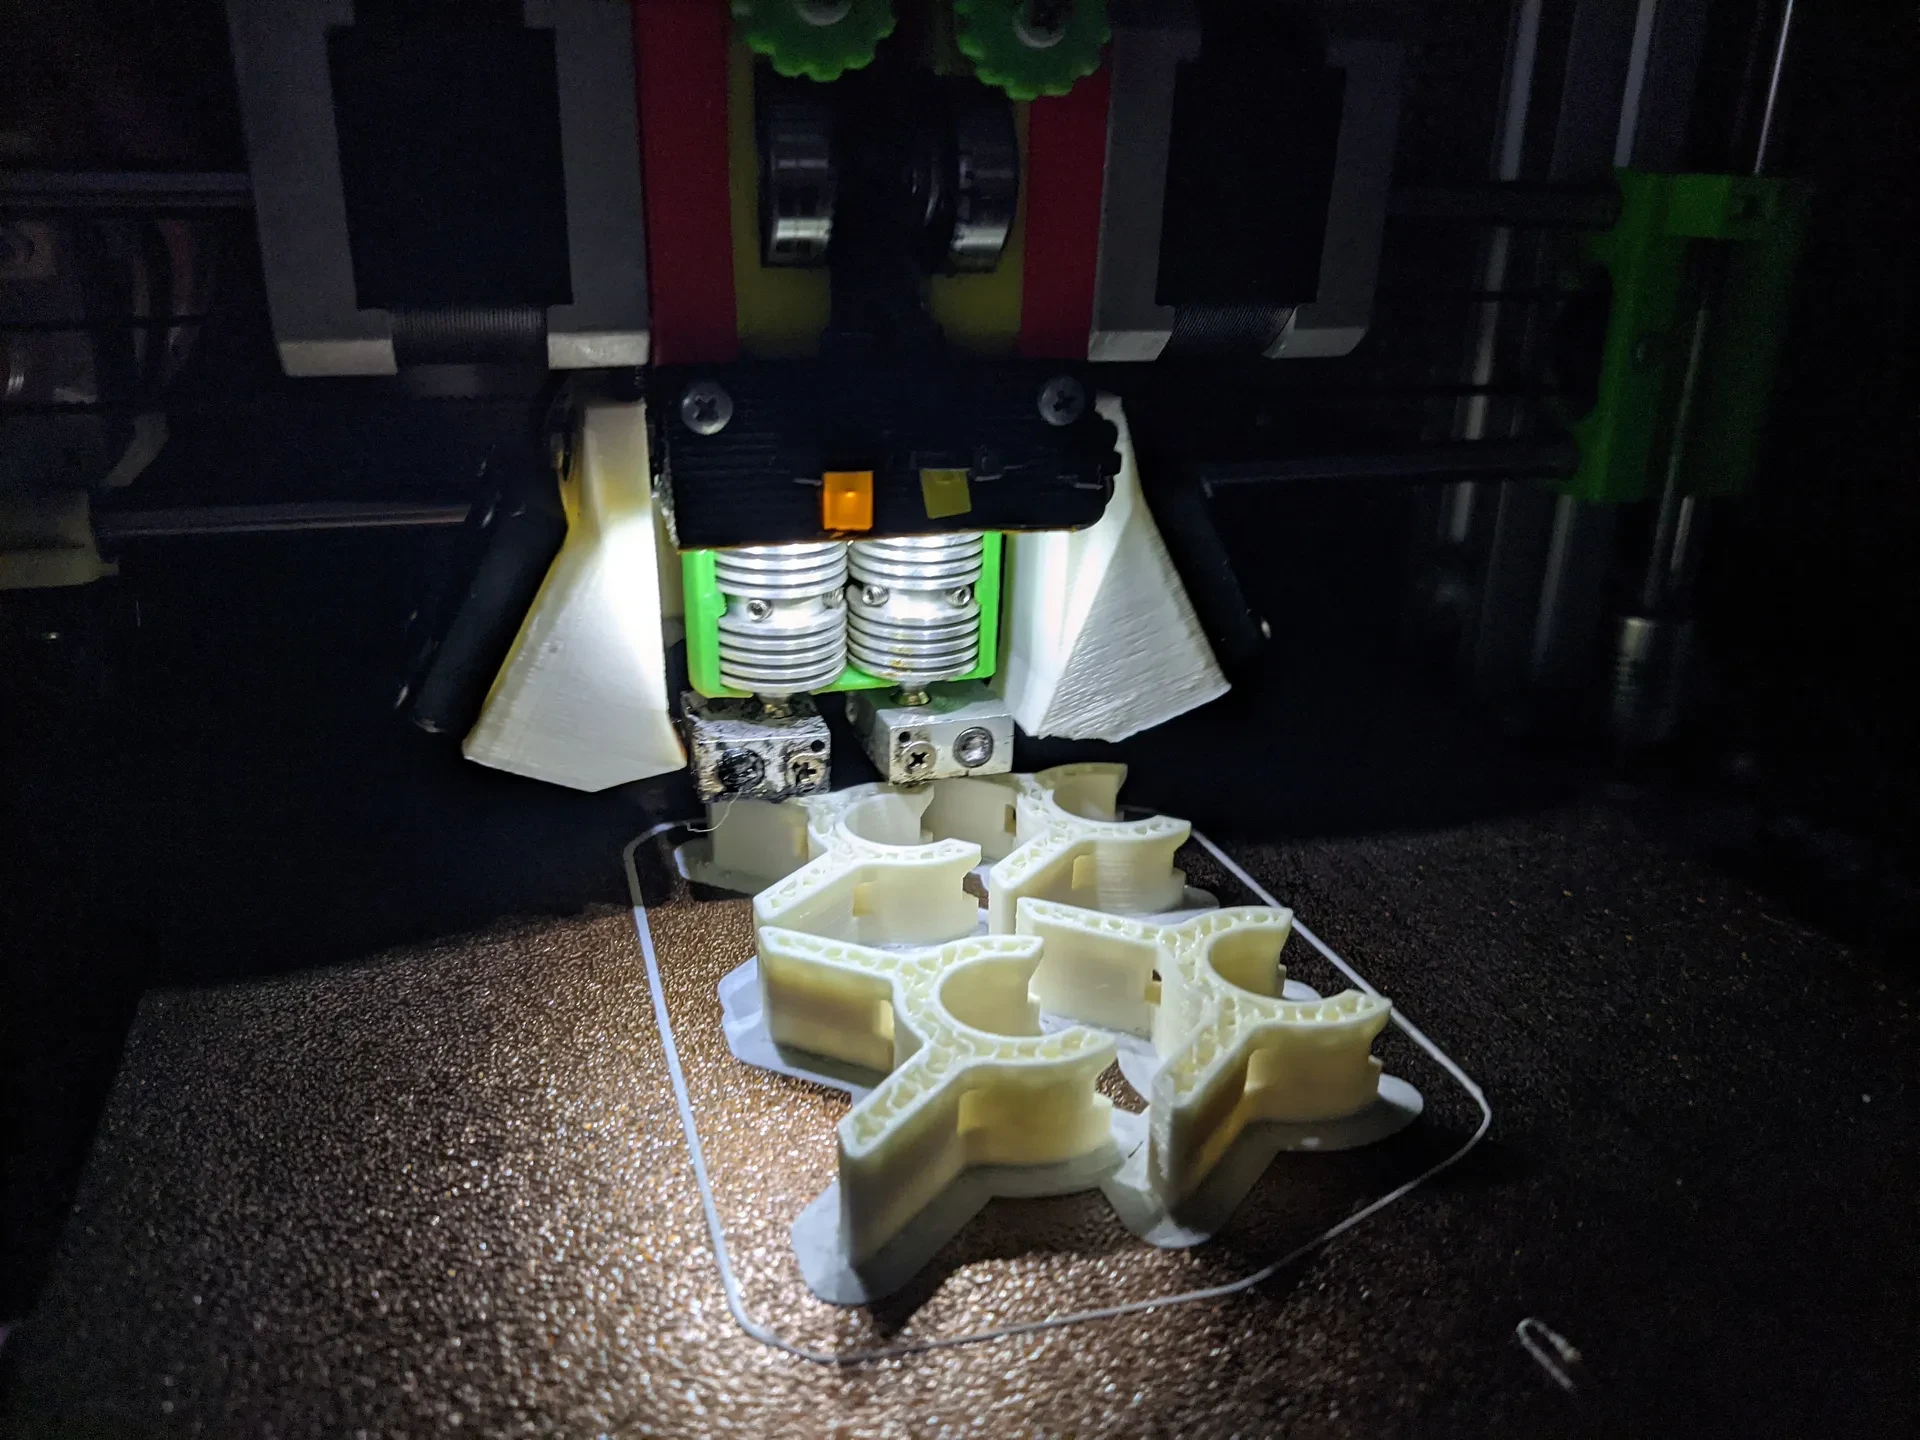 3D Printer printing 4 plastic feets